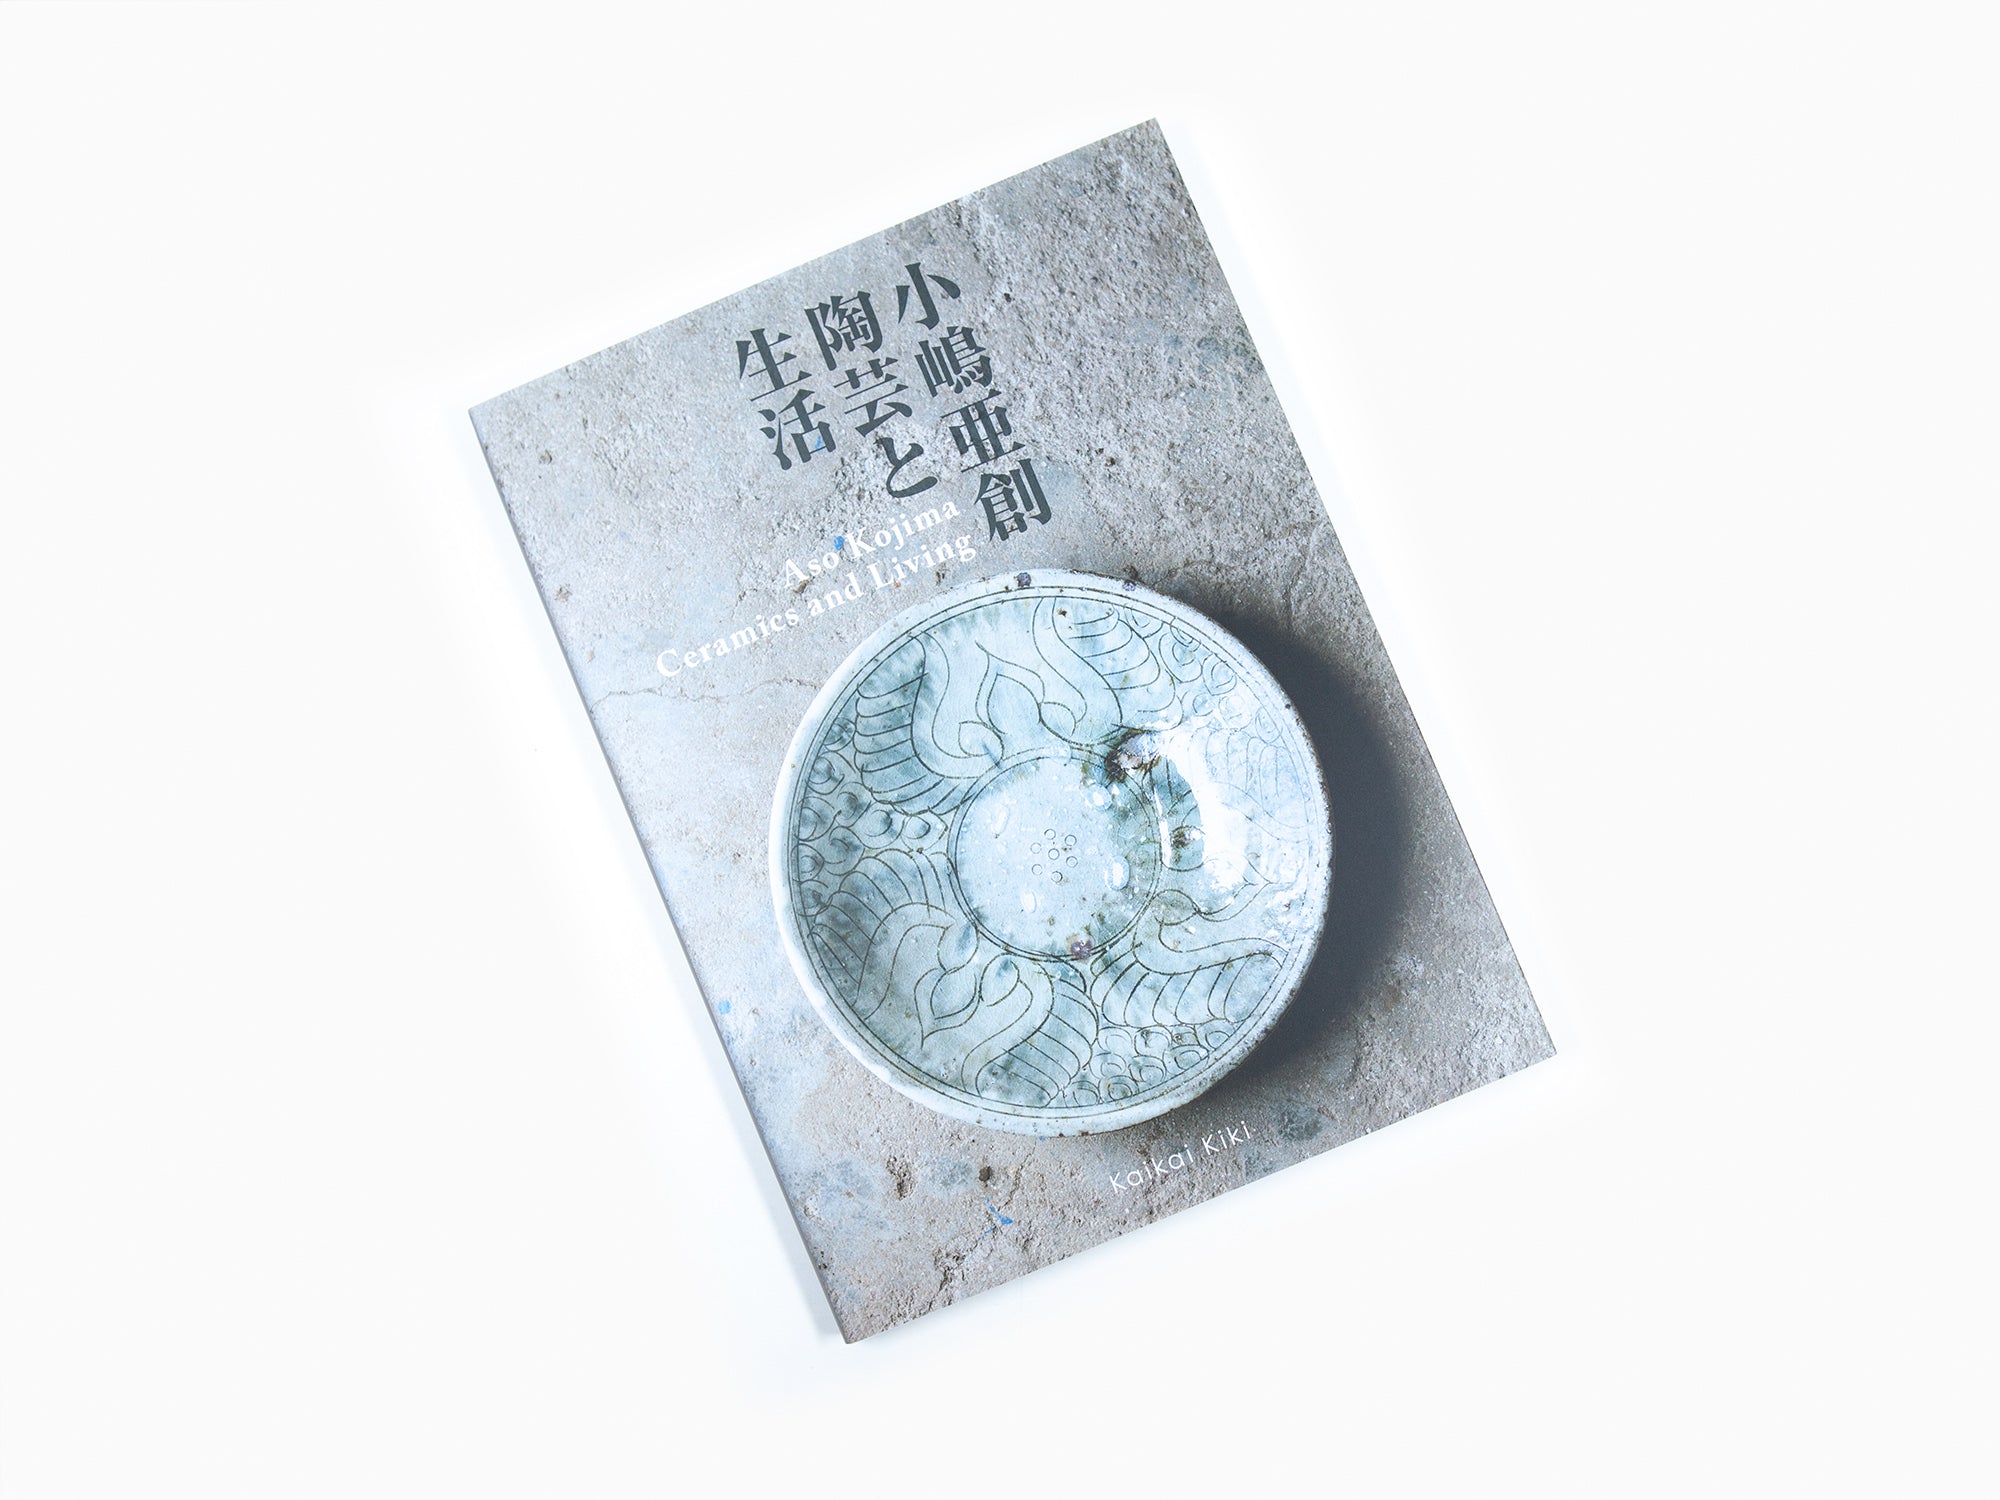 Aso Kojima - Ceramics and Living